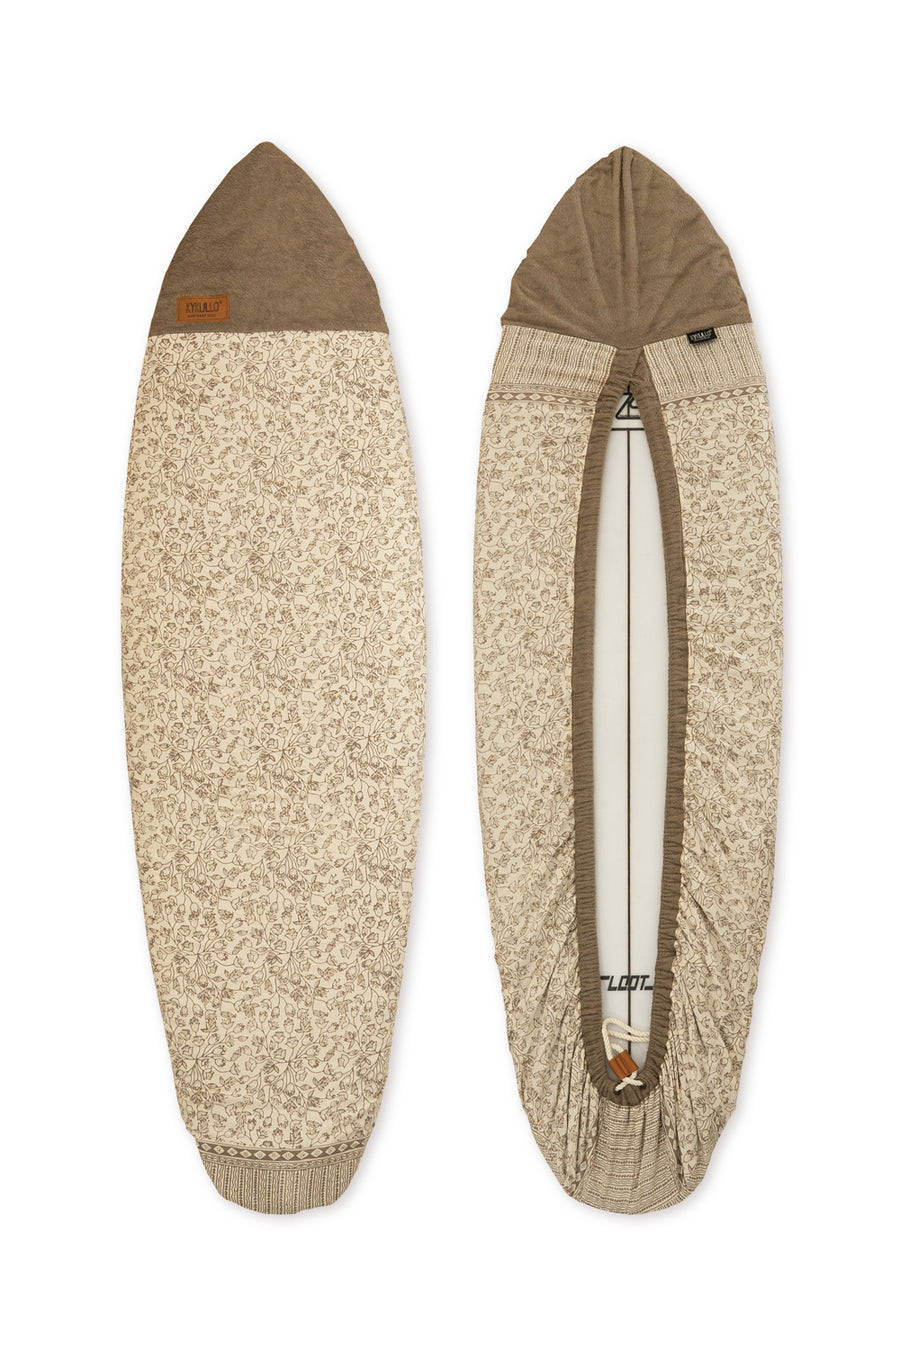 SURFWRAP 6'4 - ALMOND